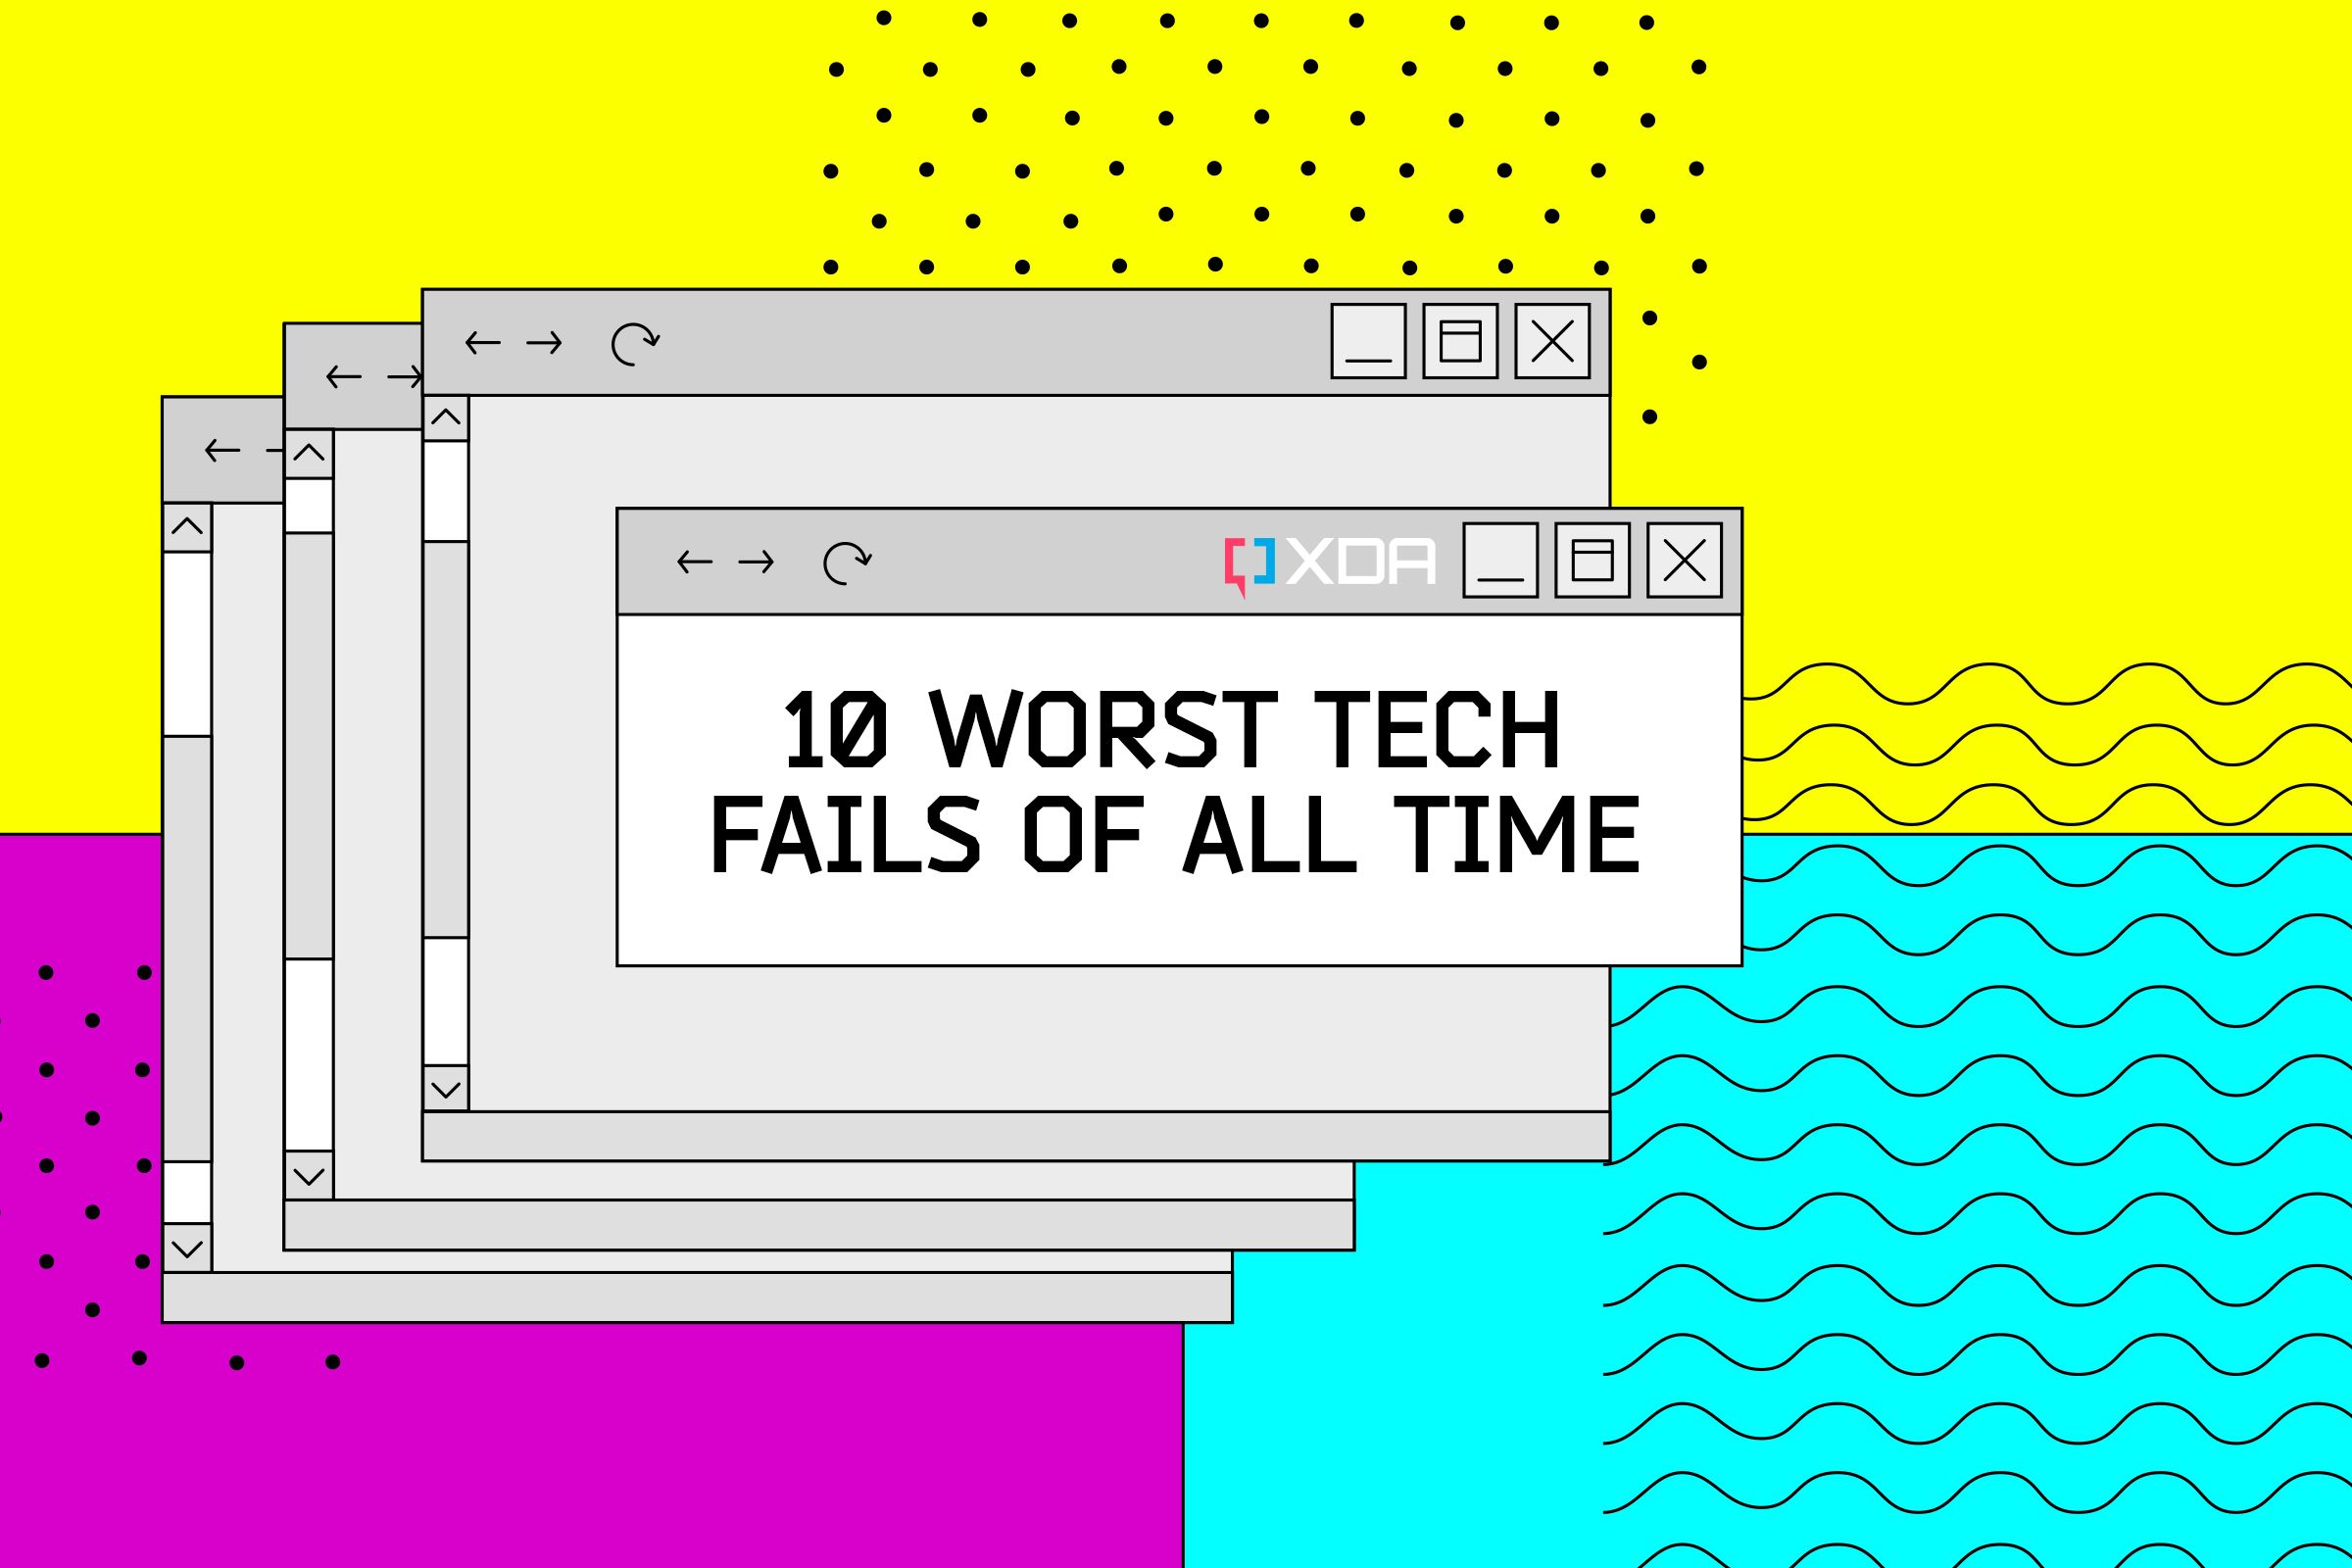 10 worst tech fails of all time